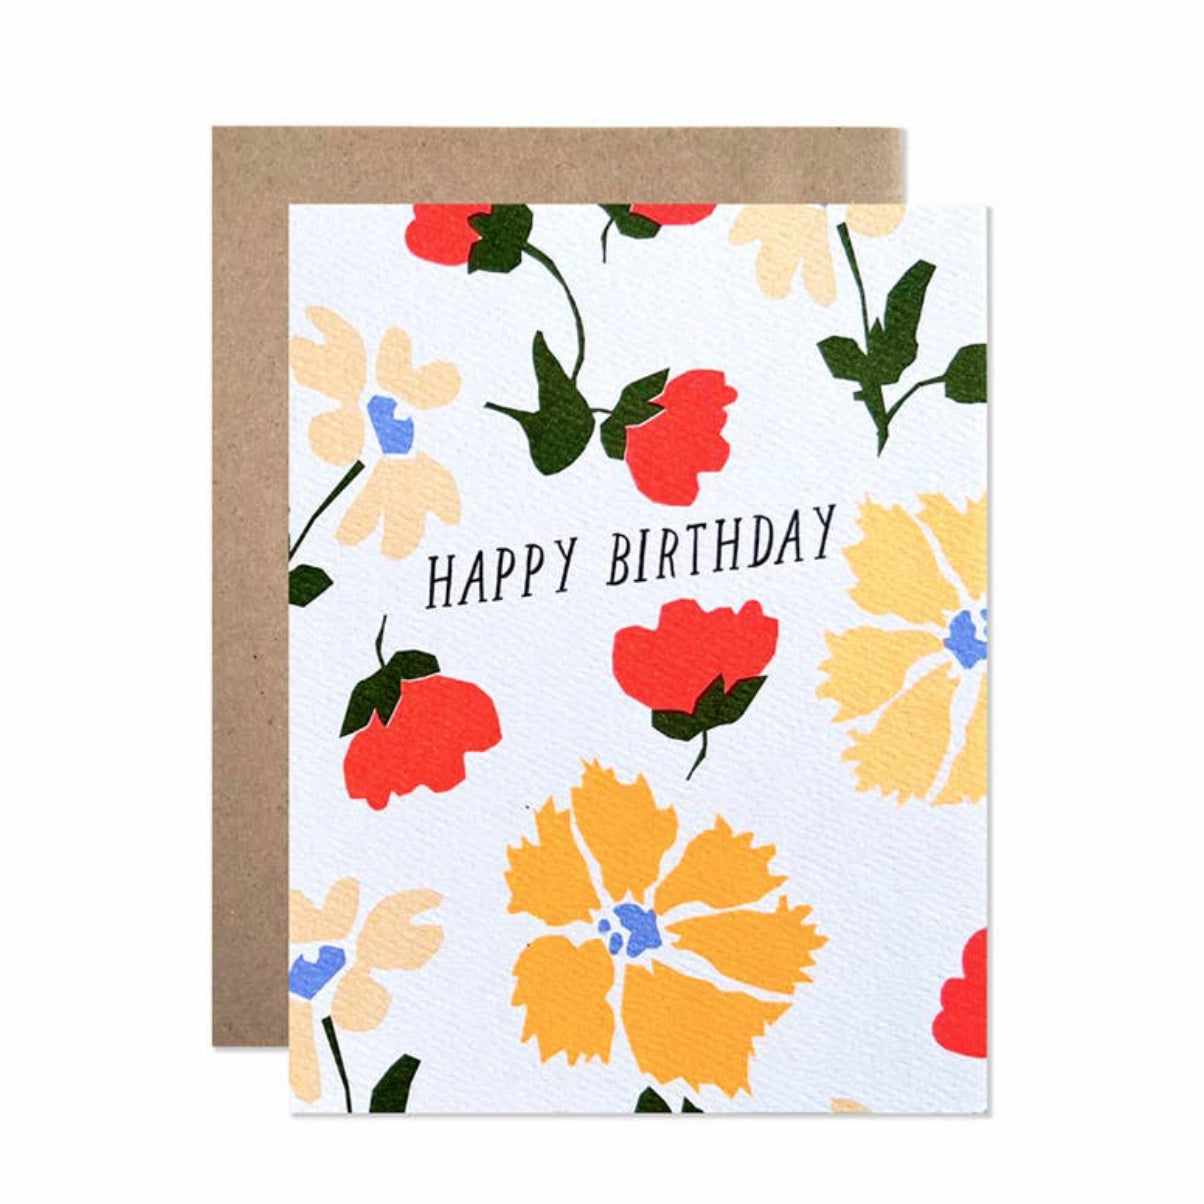 Happy Birthday flowers greeting card